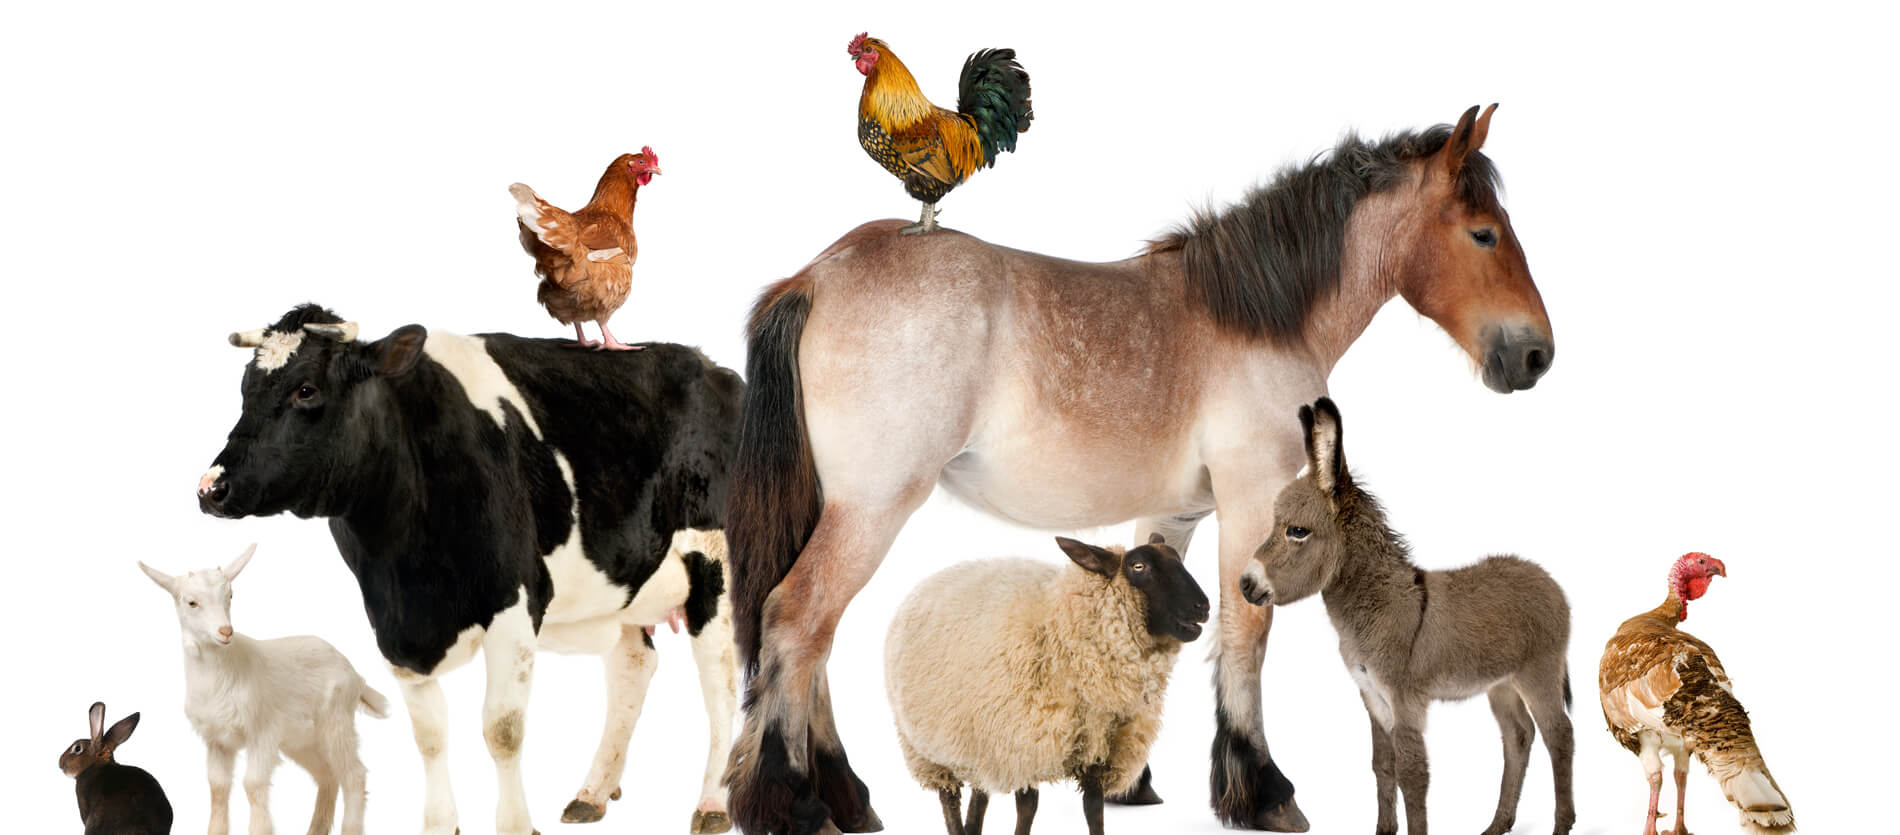 Farm animals including horse, cow, chicken, donkey, sheep, turkey and rabbit.